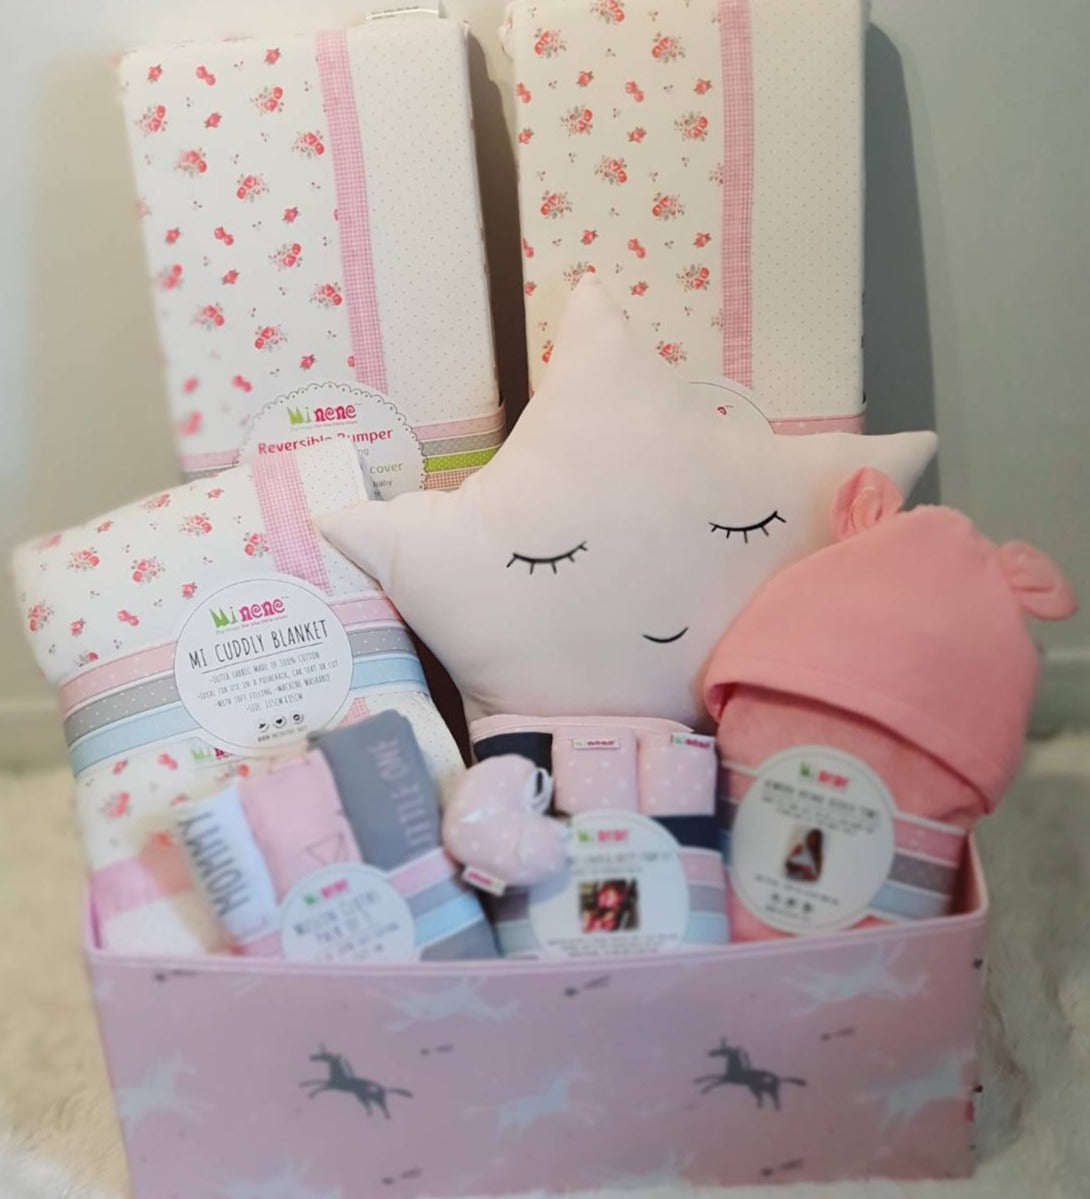 Super Special Newborn Gift Box - Cream Floral Bedding !